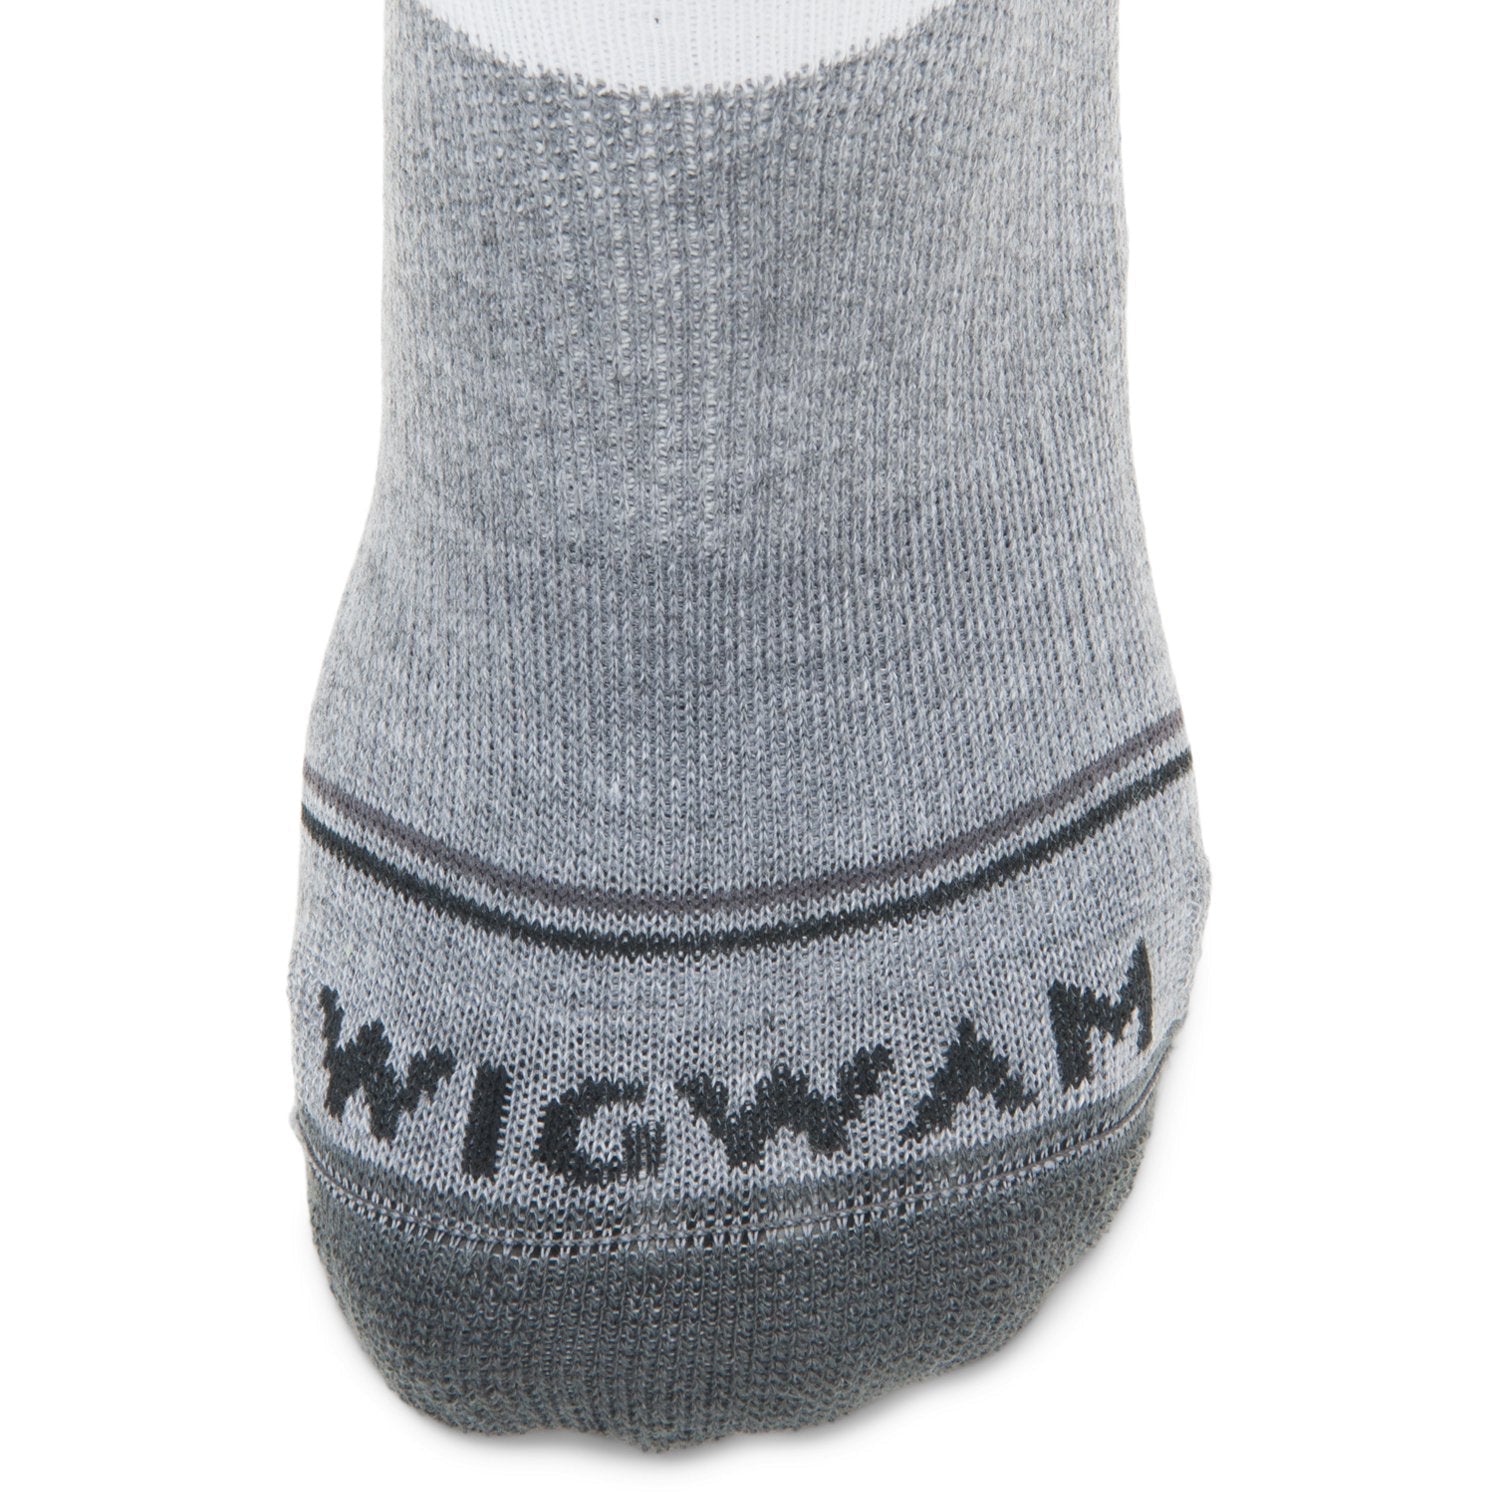 Surpass Lightweight Quarter Sock - White/Grey toe perspective - made in The USA Wigwam Socks